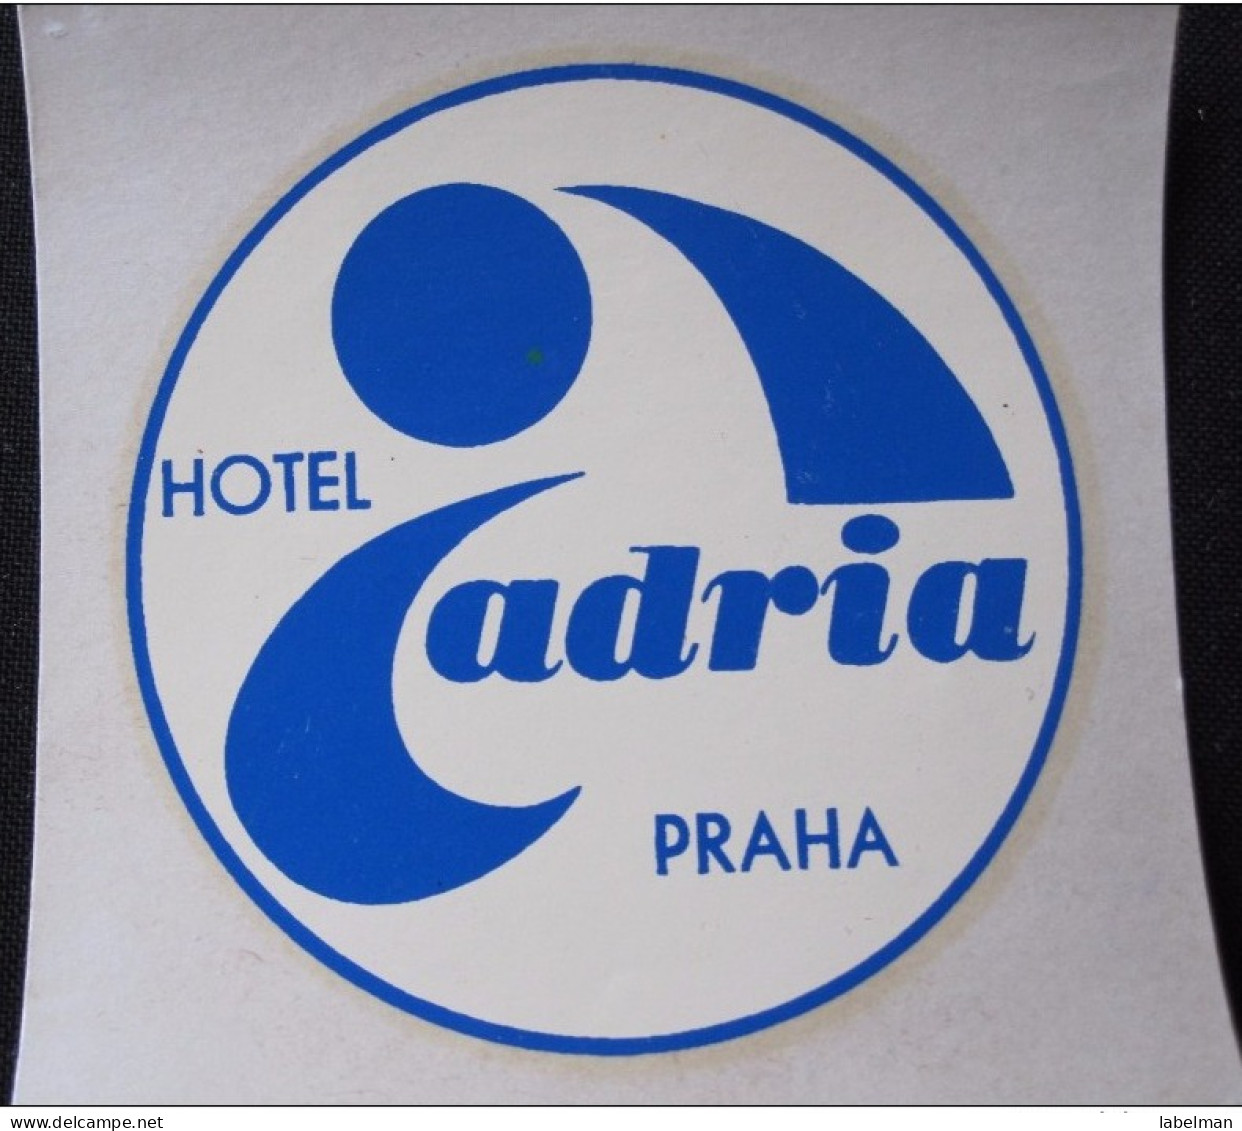 HOTEL MOTEL PENSION ADRIA PRAGA PRAHA PRAGUE CSSR CZECH CHEKOSLOVAKIA LUGGAGE LABEL ETIQUETTE AUFKLEBER DECAL STICKER - Hotel Labels